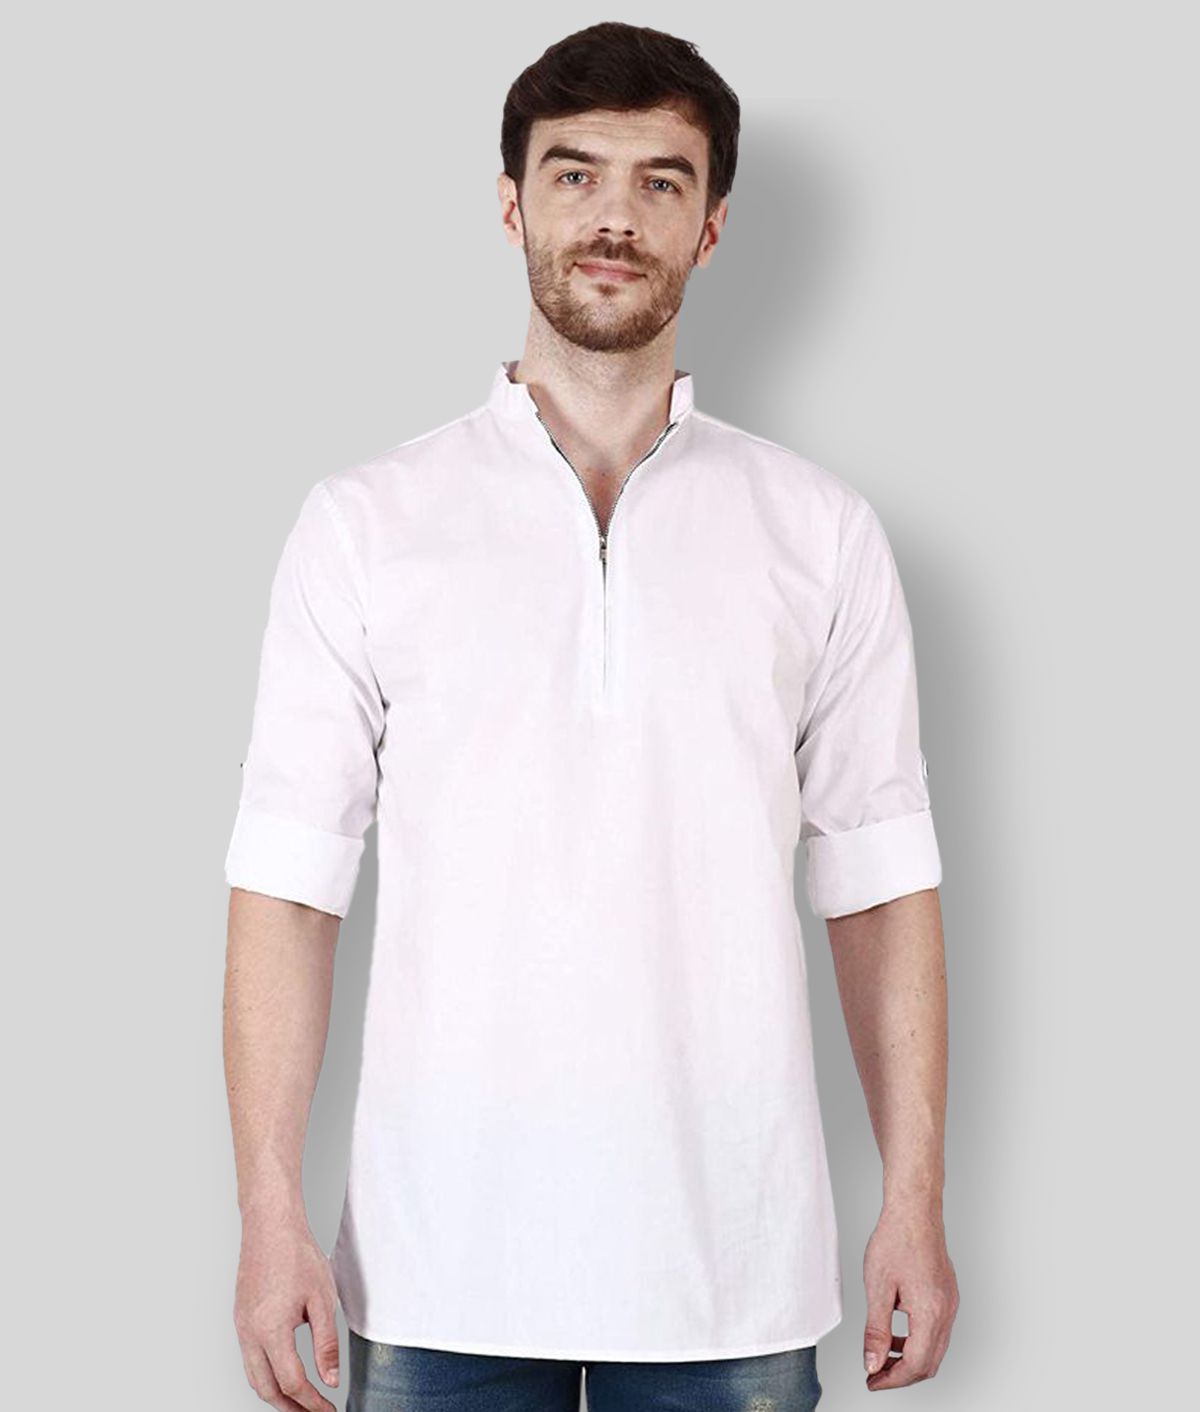 Vida Loca - White Linen Slim Fit Men's Casual Shirt (Pack of 1)